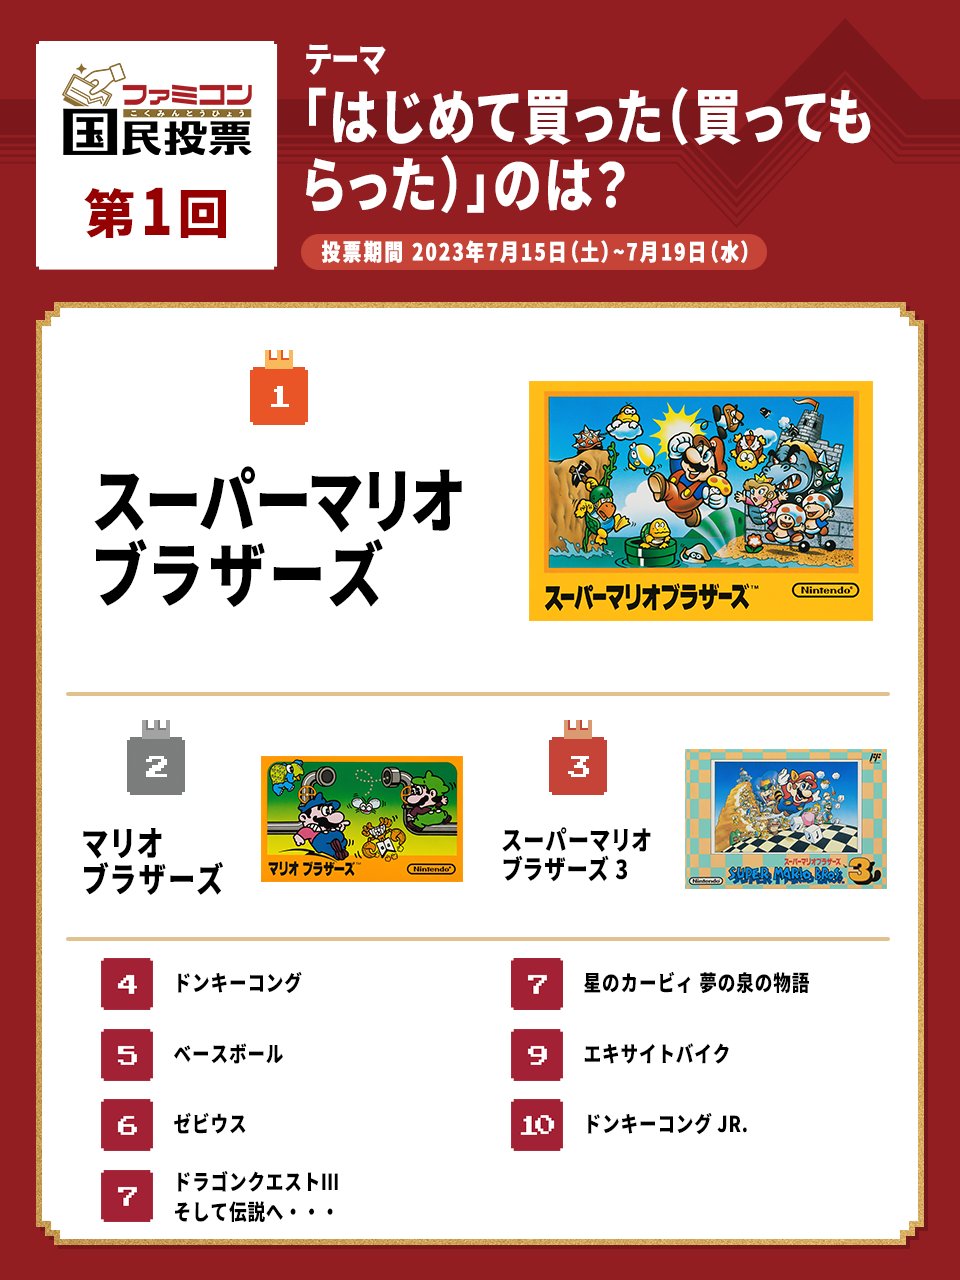 Famicom National Poll No. 1 Results, Next Poll Announced